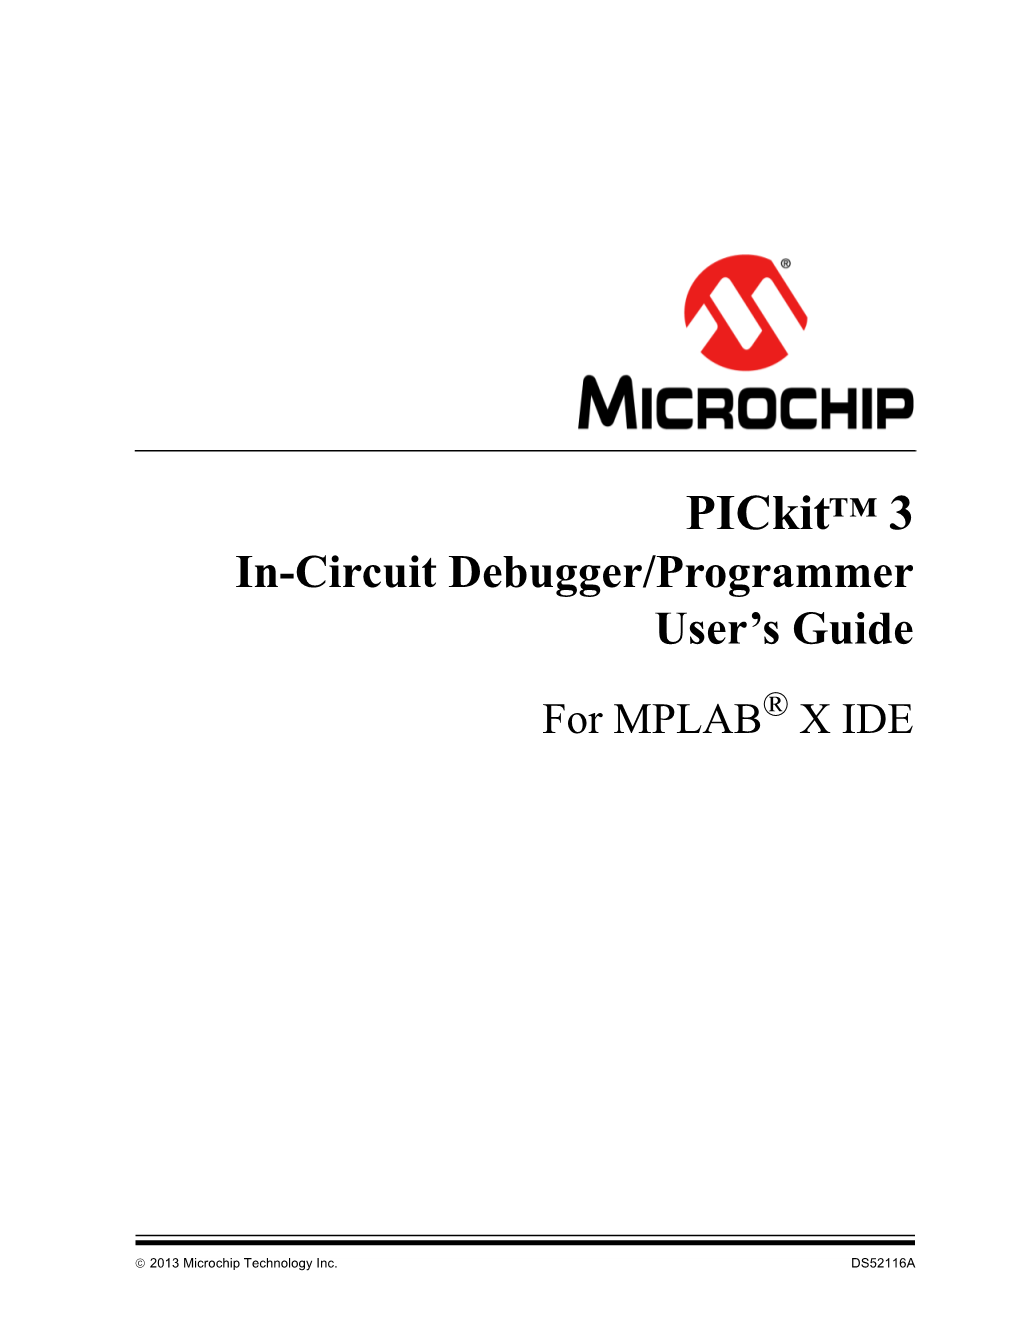 Pickit 3 In-Circuit Debugger/Programmer User's Guide